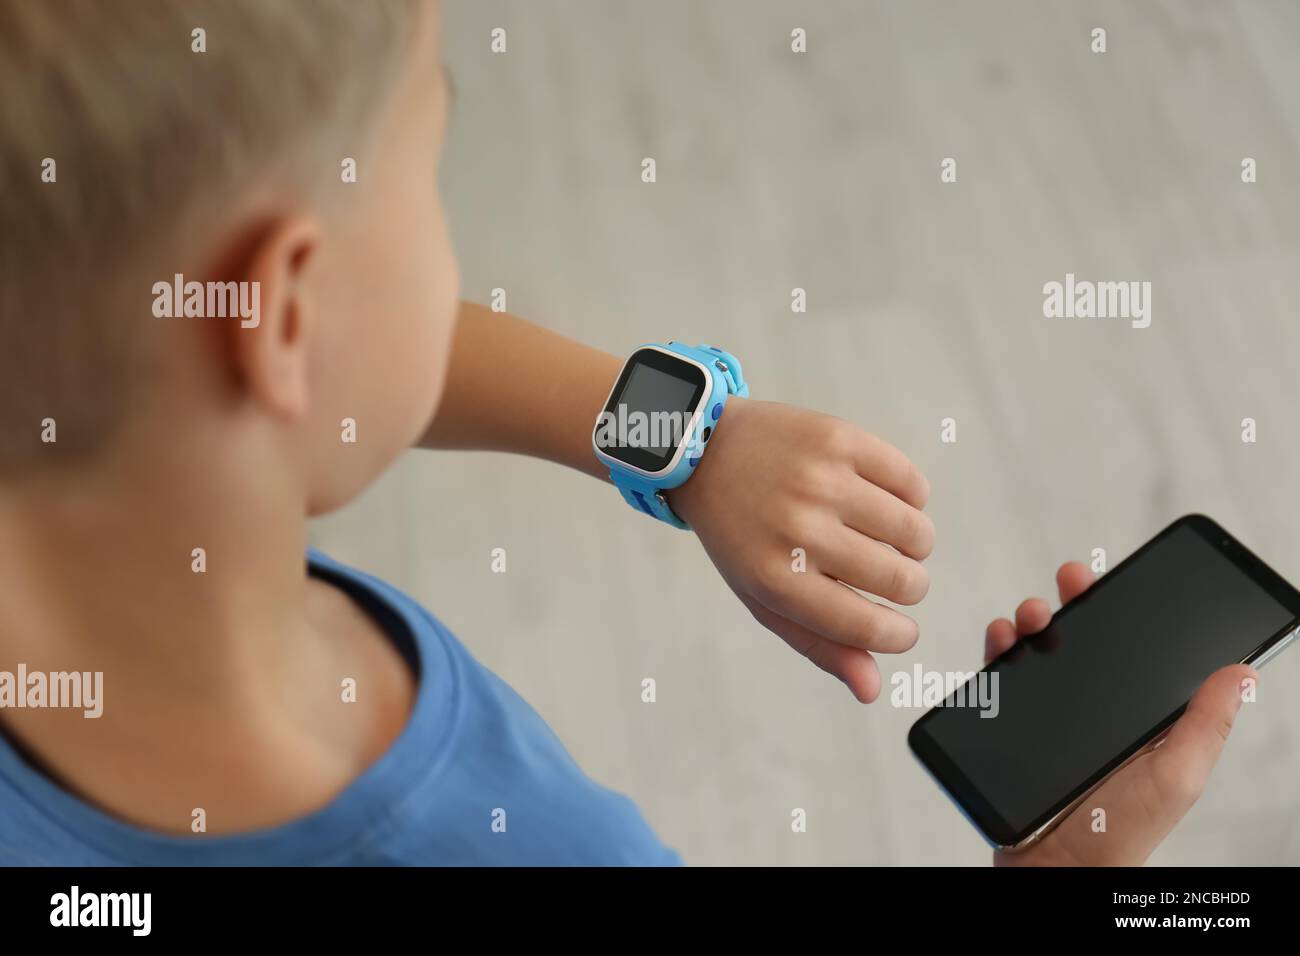 Boy with stylish smart watch and phone, closeup view Stock Photo